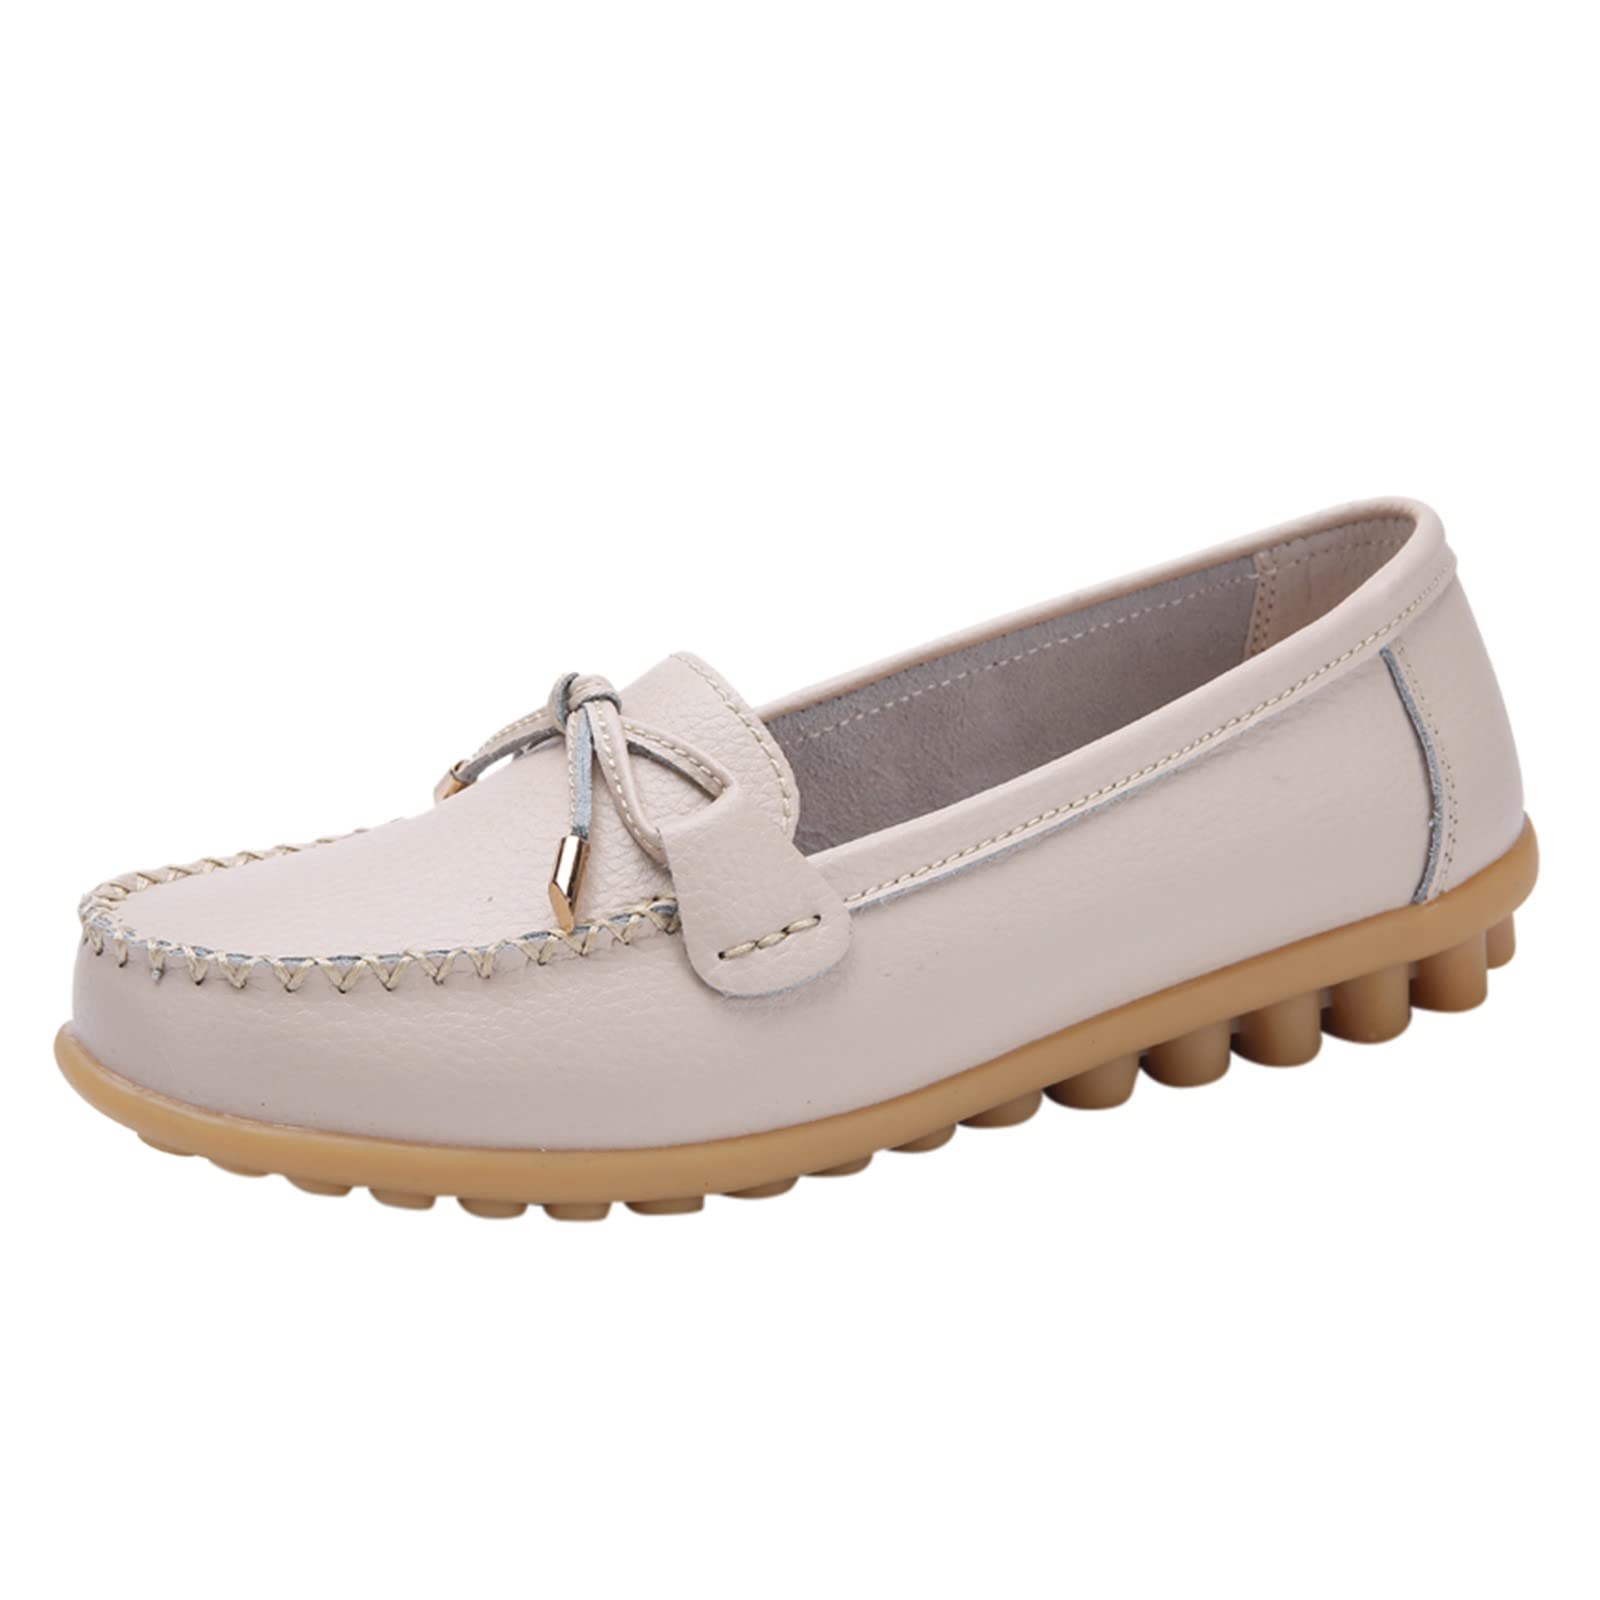 AEROSOFT - Trendy Boat Sandals - Outdoor Thong Arch Support Summer Sandals  For Women - Walmart.com